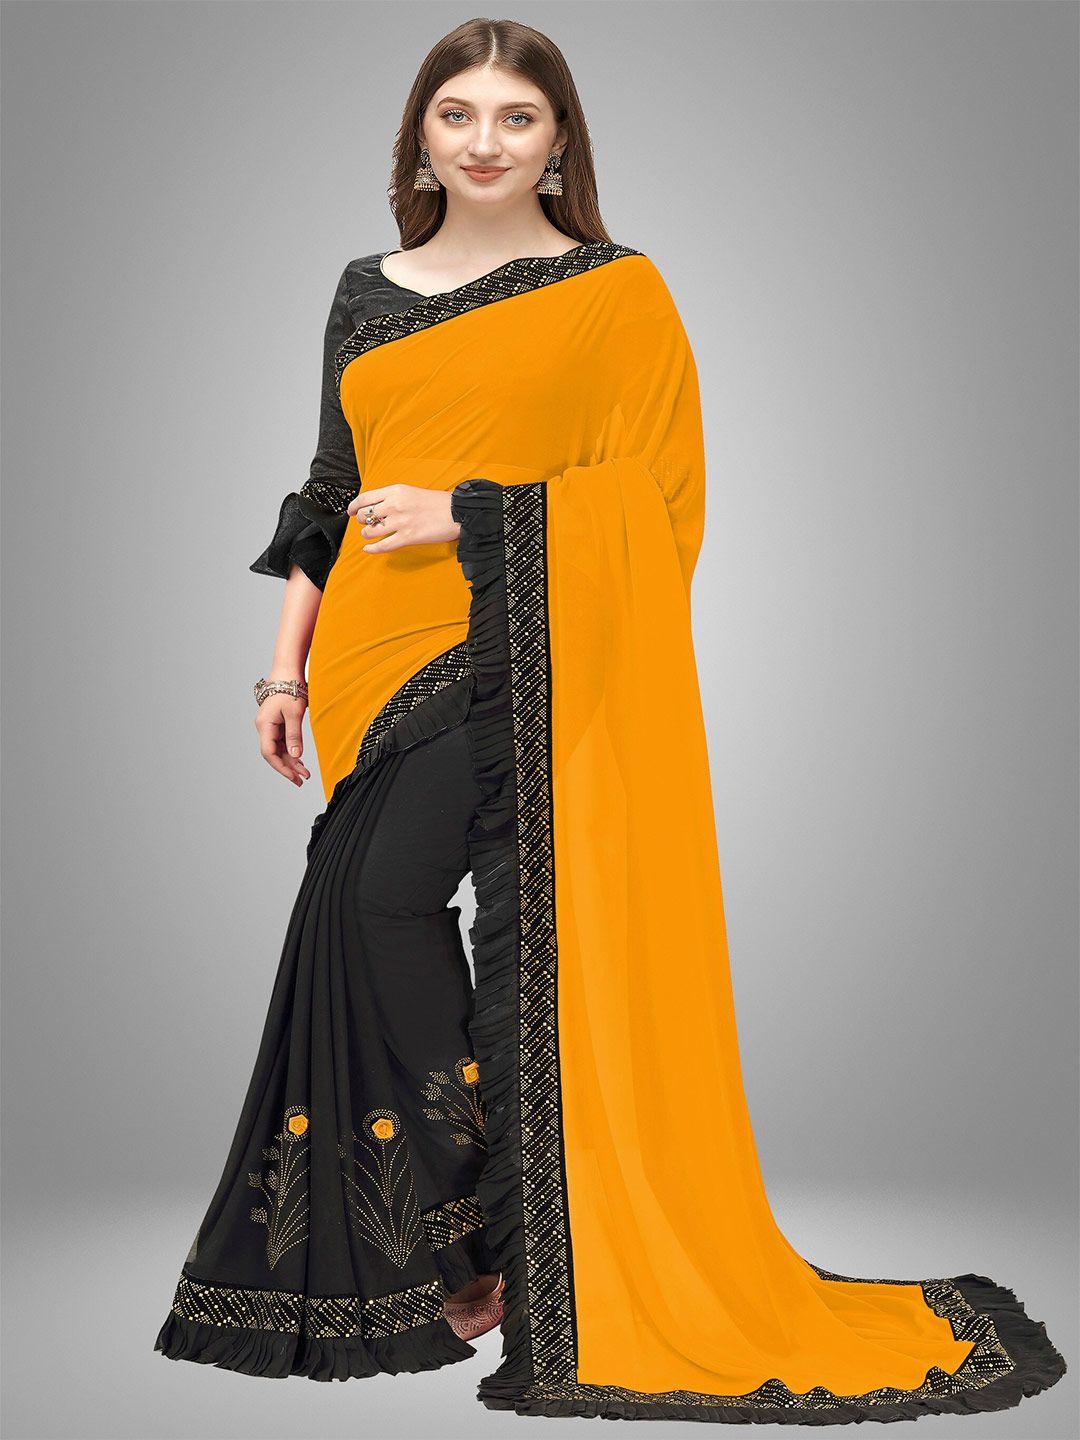 trendmalls yellow & black floral embroidered mysore silk saree